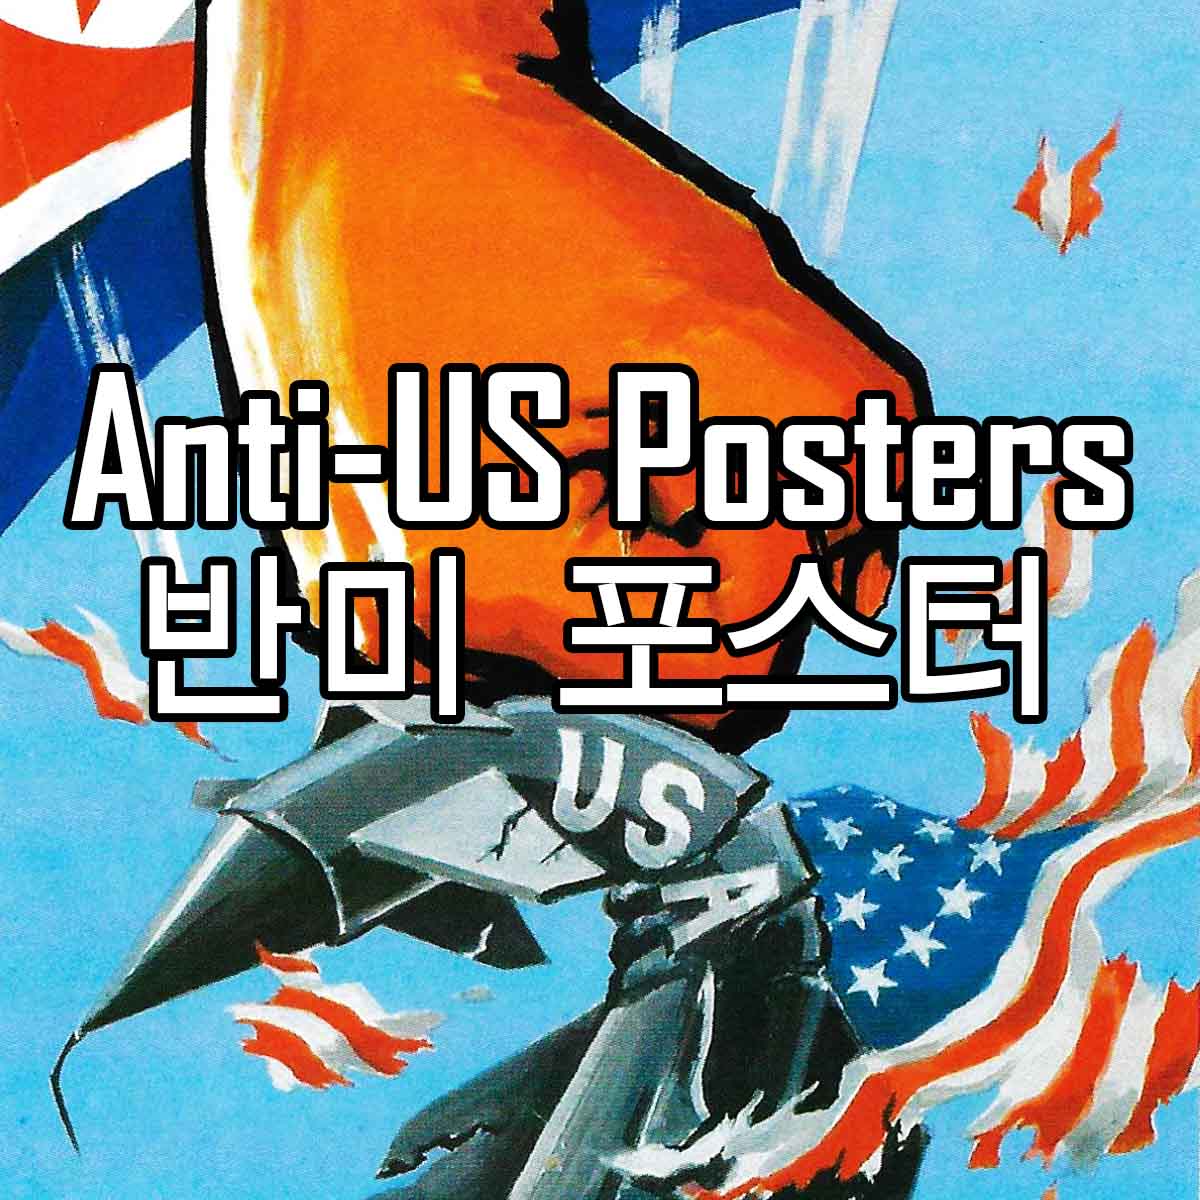 Anti-US Posters